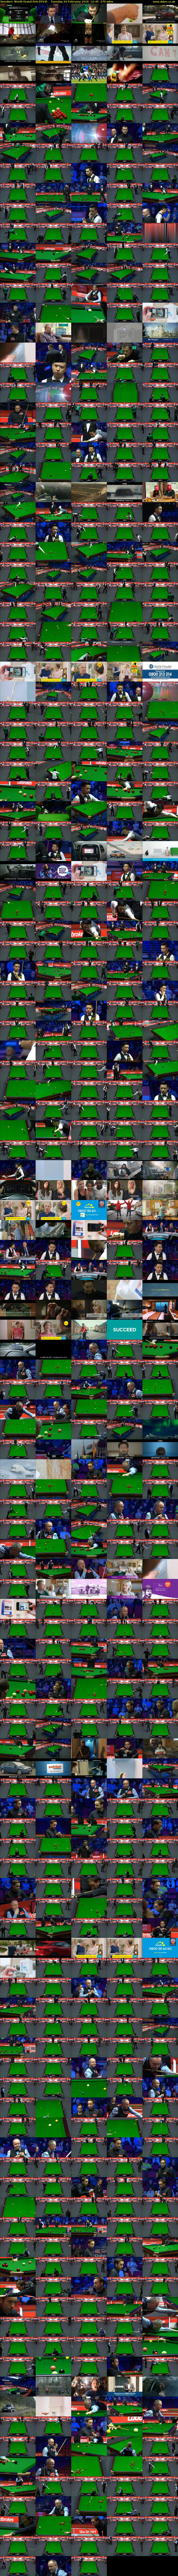 Snooker: World Grand Prix (ITV4) Tuesday 20 February 2018 12:45 - 17:15